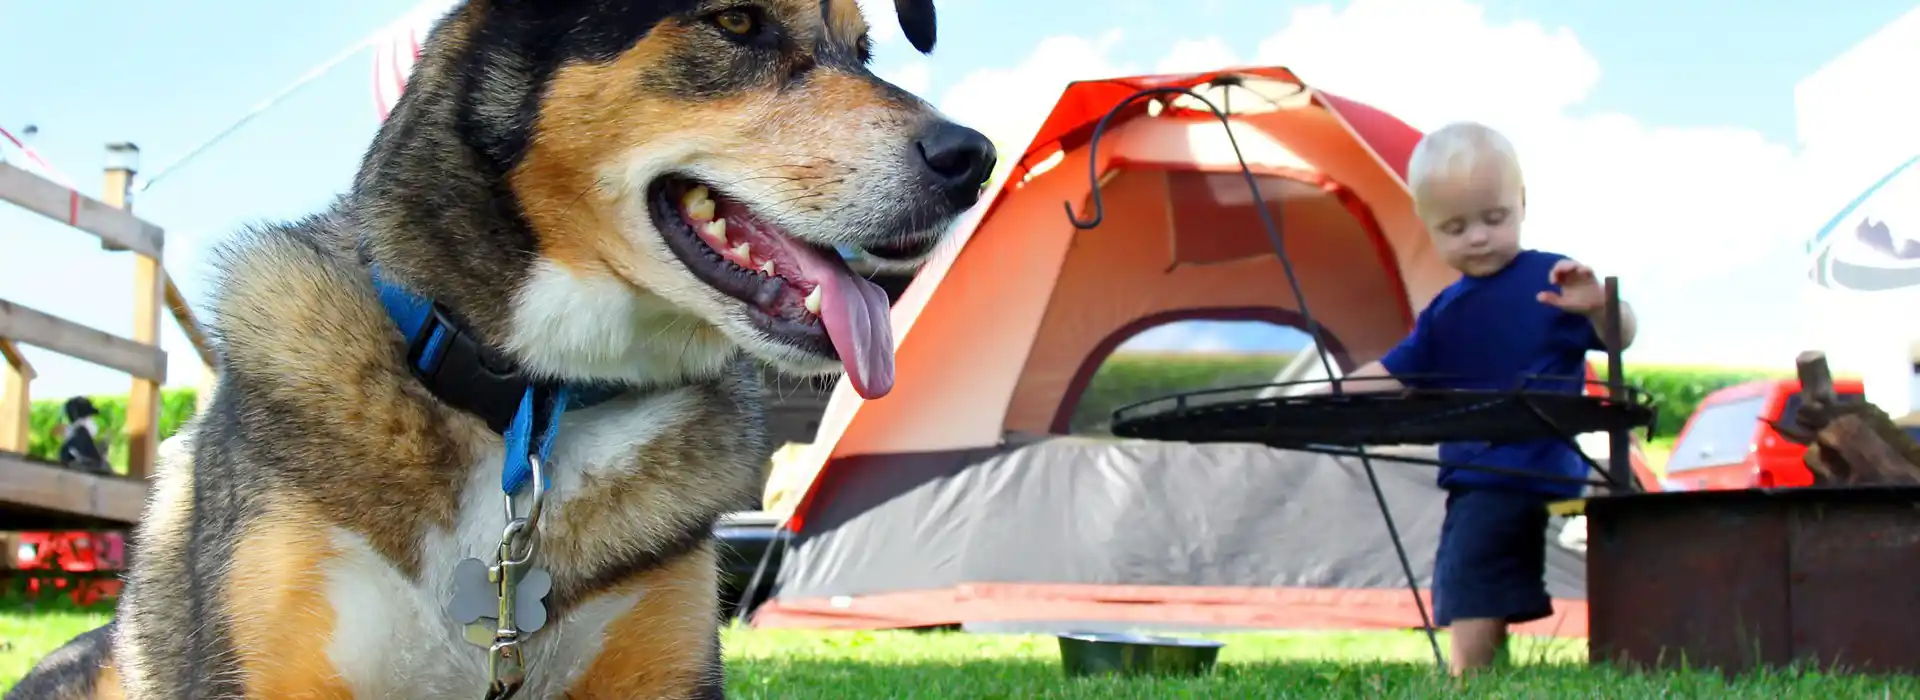 Dog friendly campsites